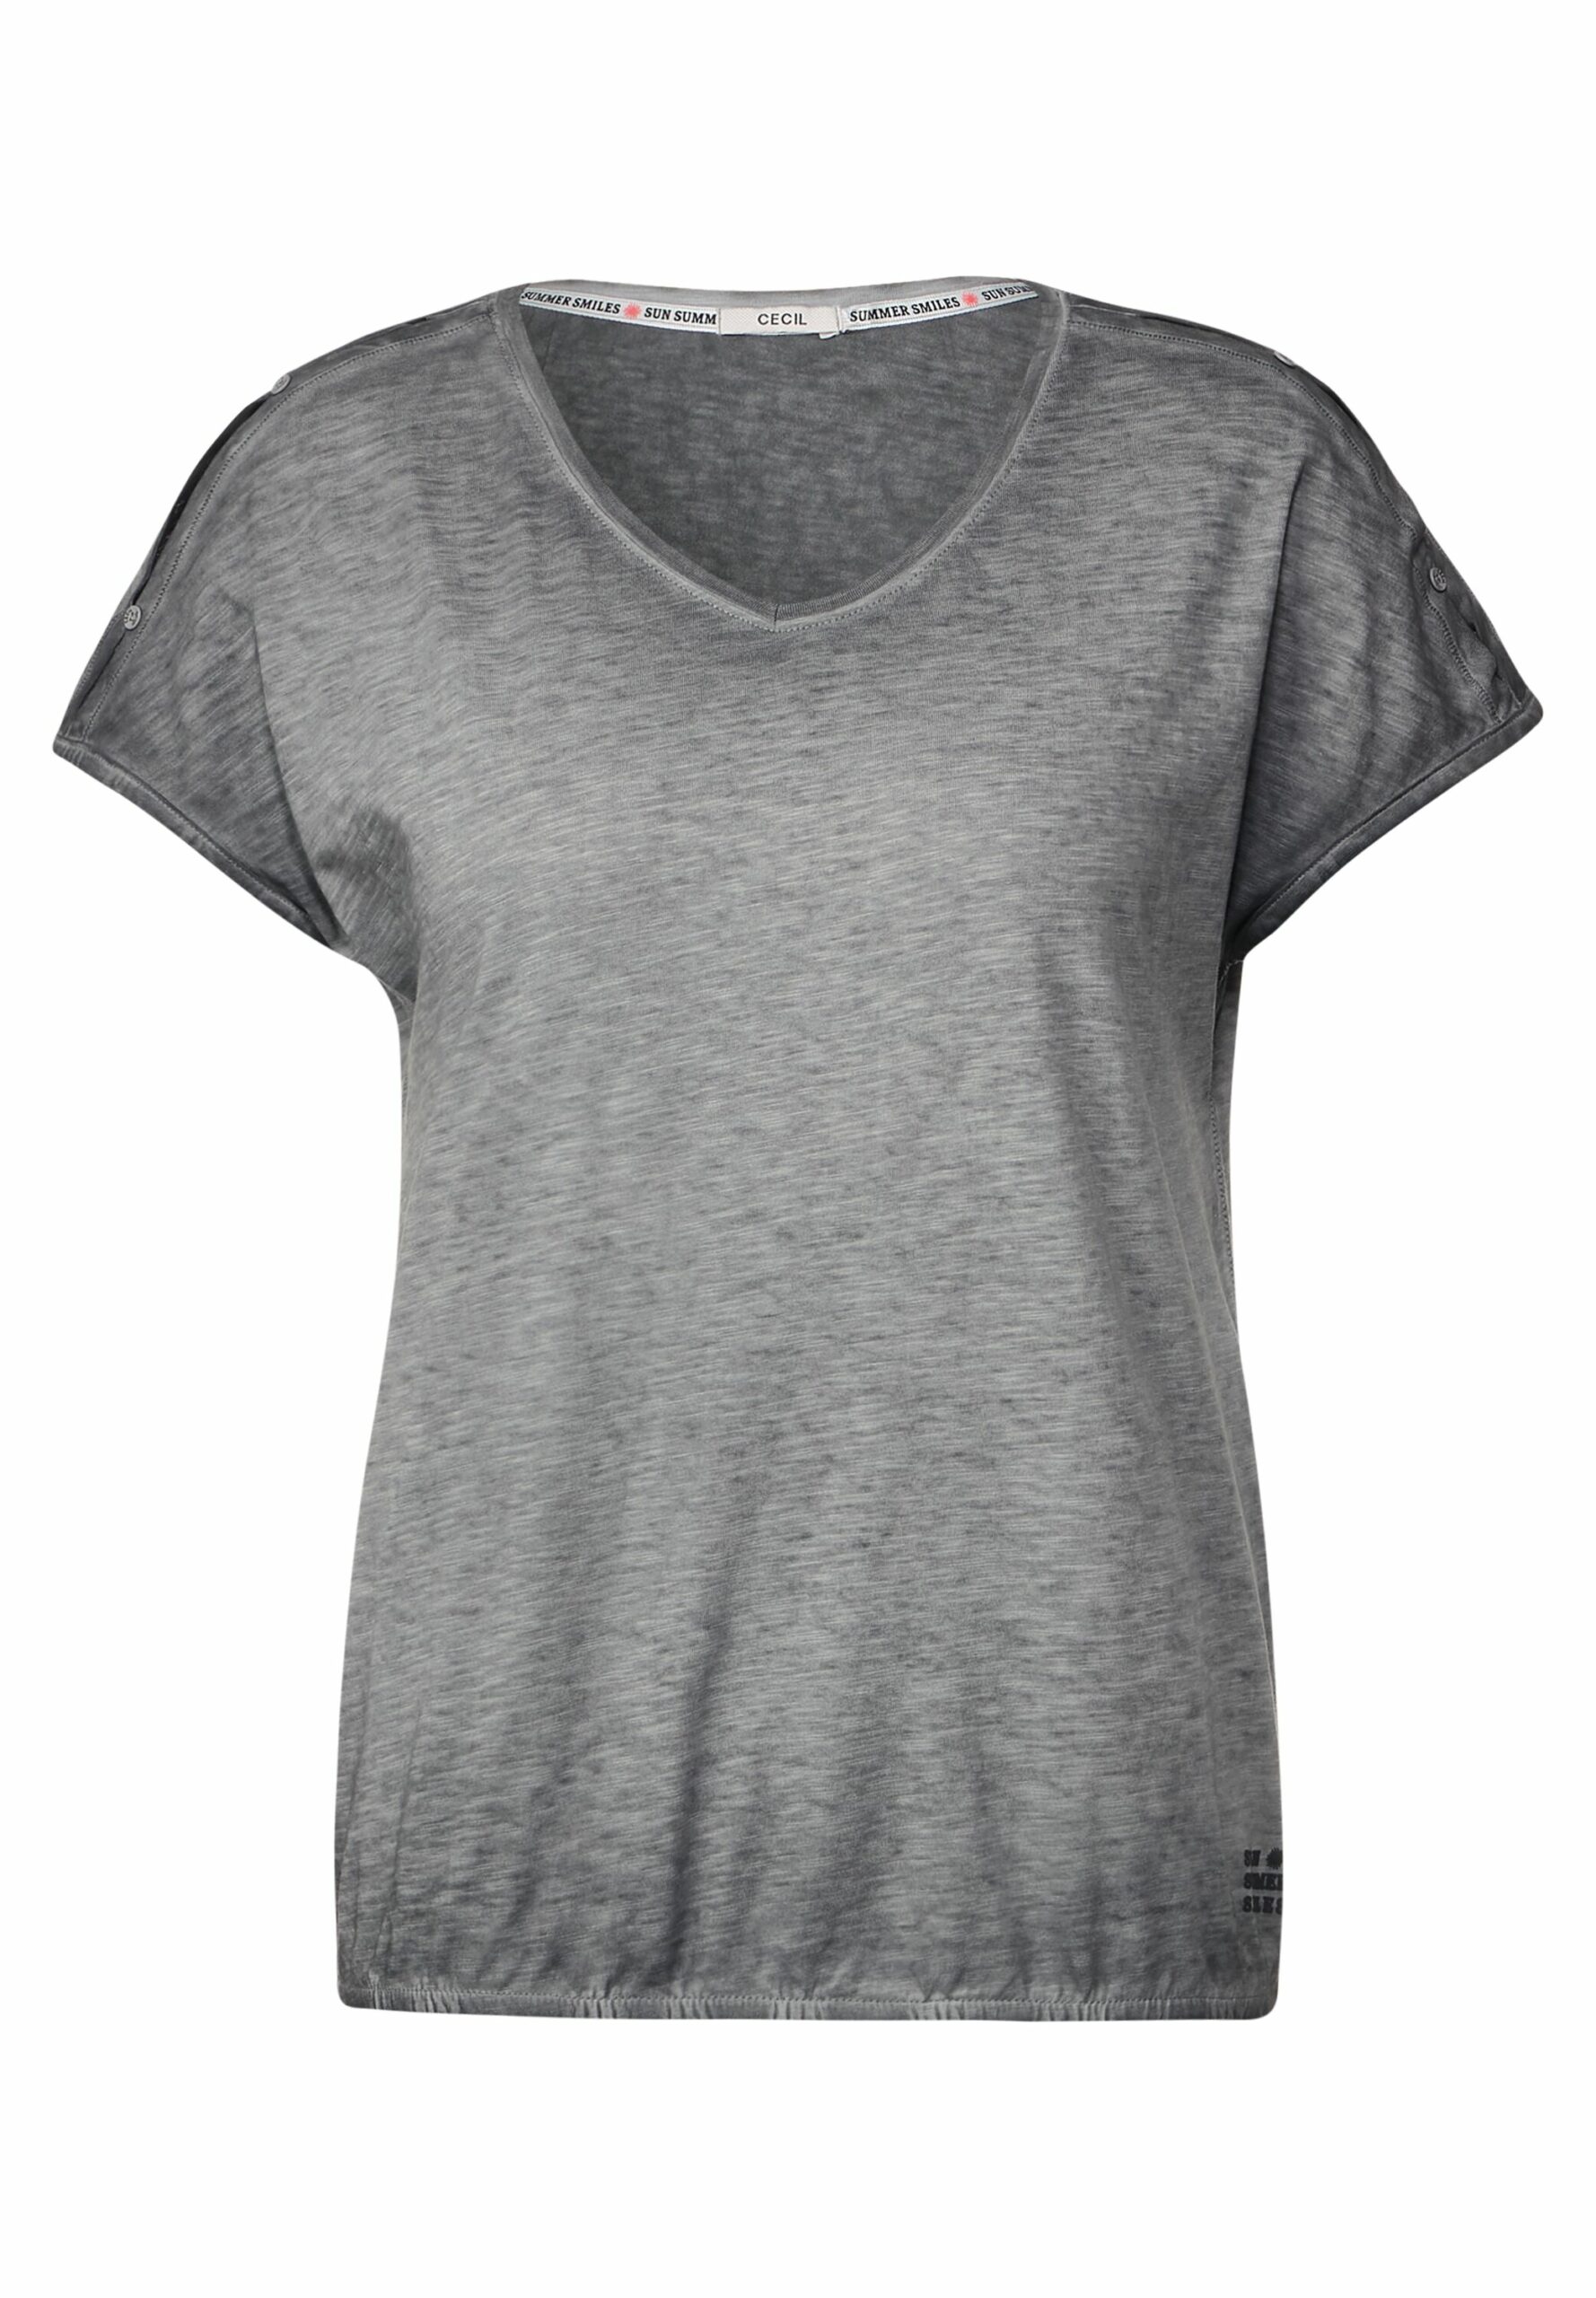 CECIL Damen Kamlage Modehaus T-Shirt Webshop 